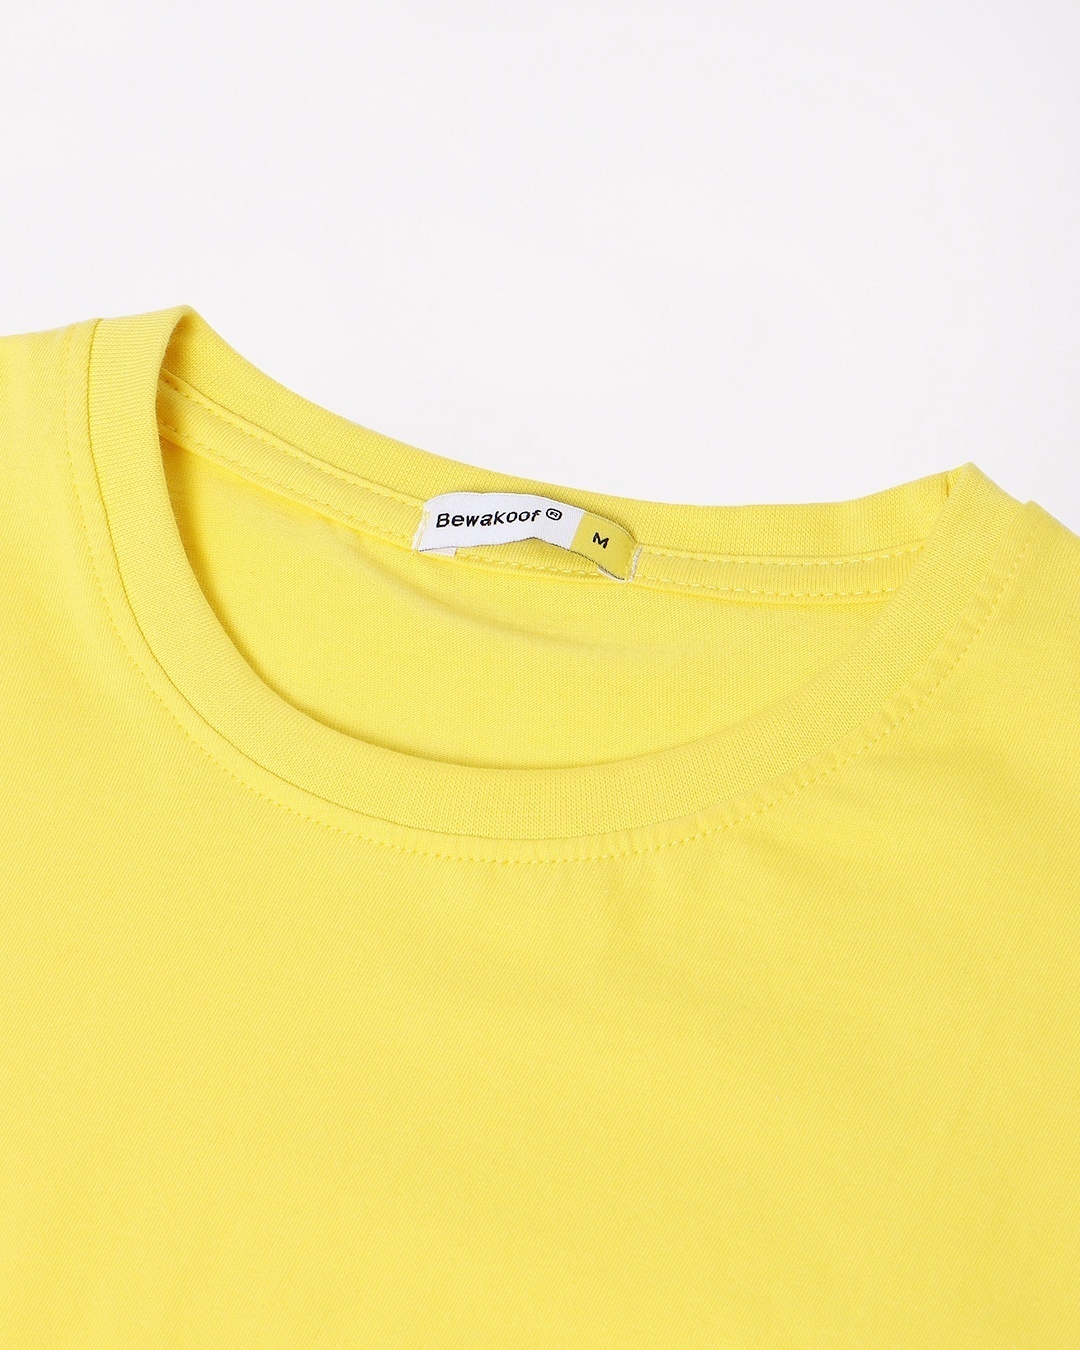 Shop Pineapple Yellow Half Sleeve T-Shirt